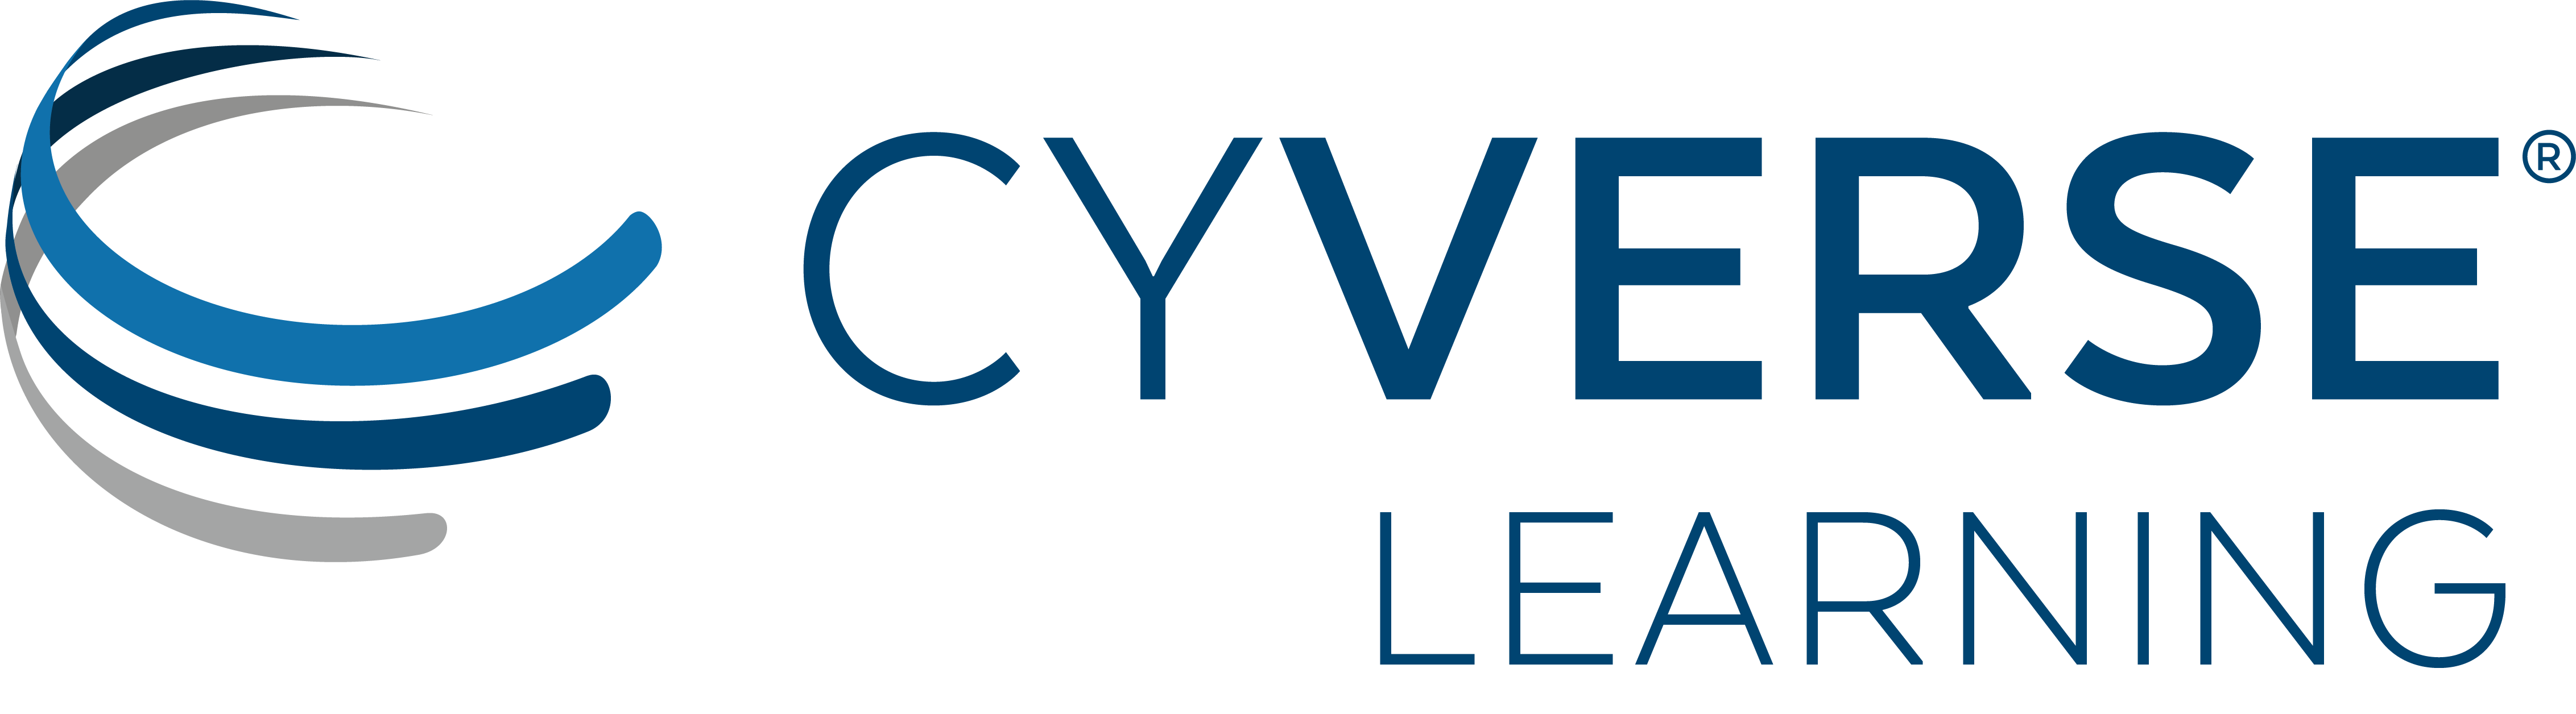 CyVerse_logo2